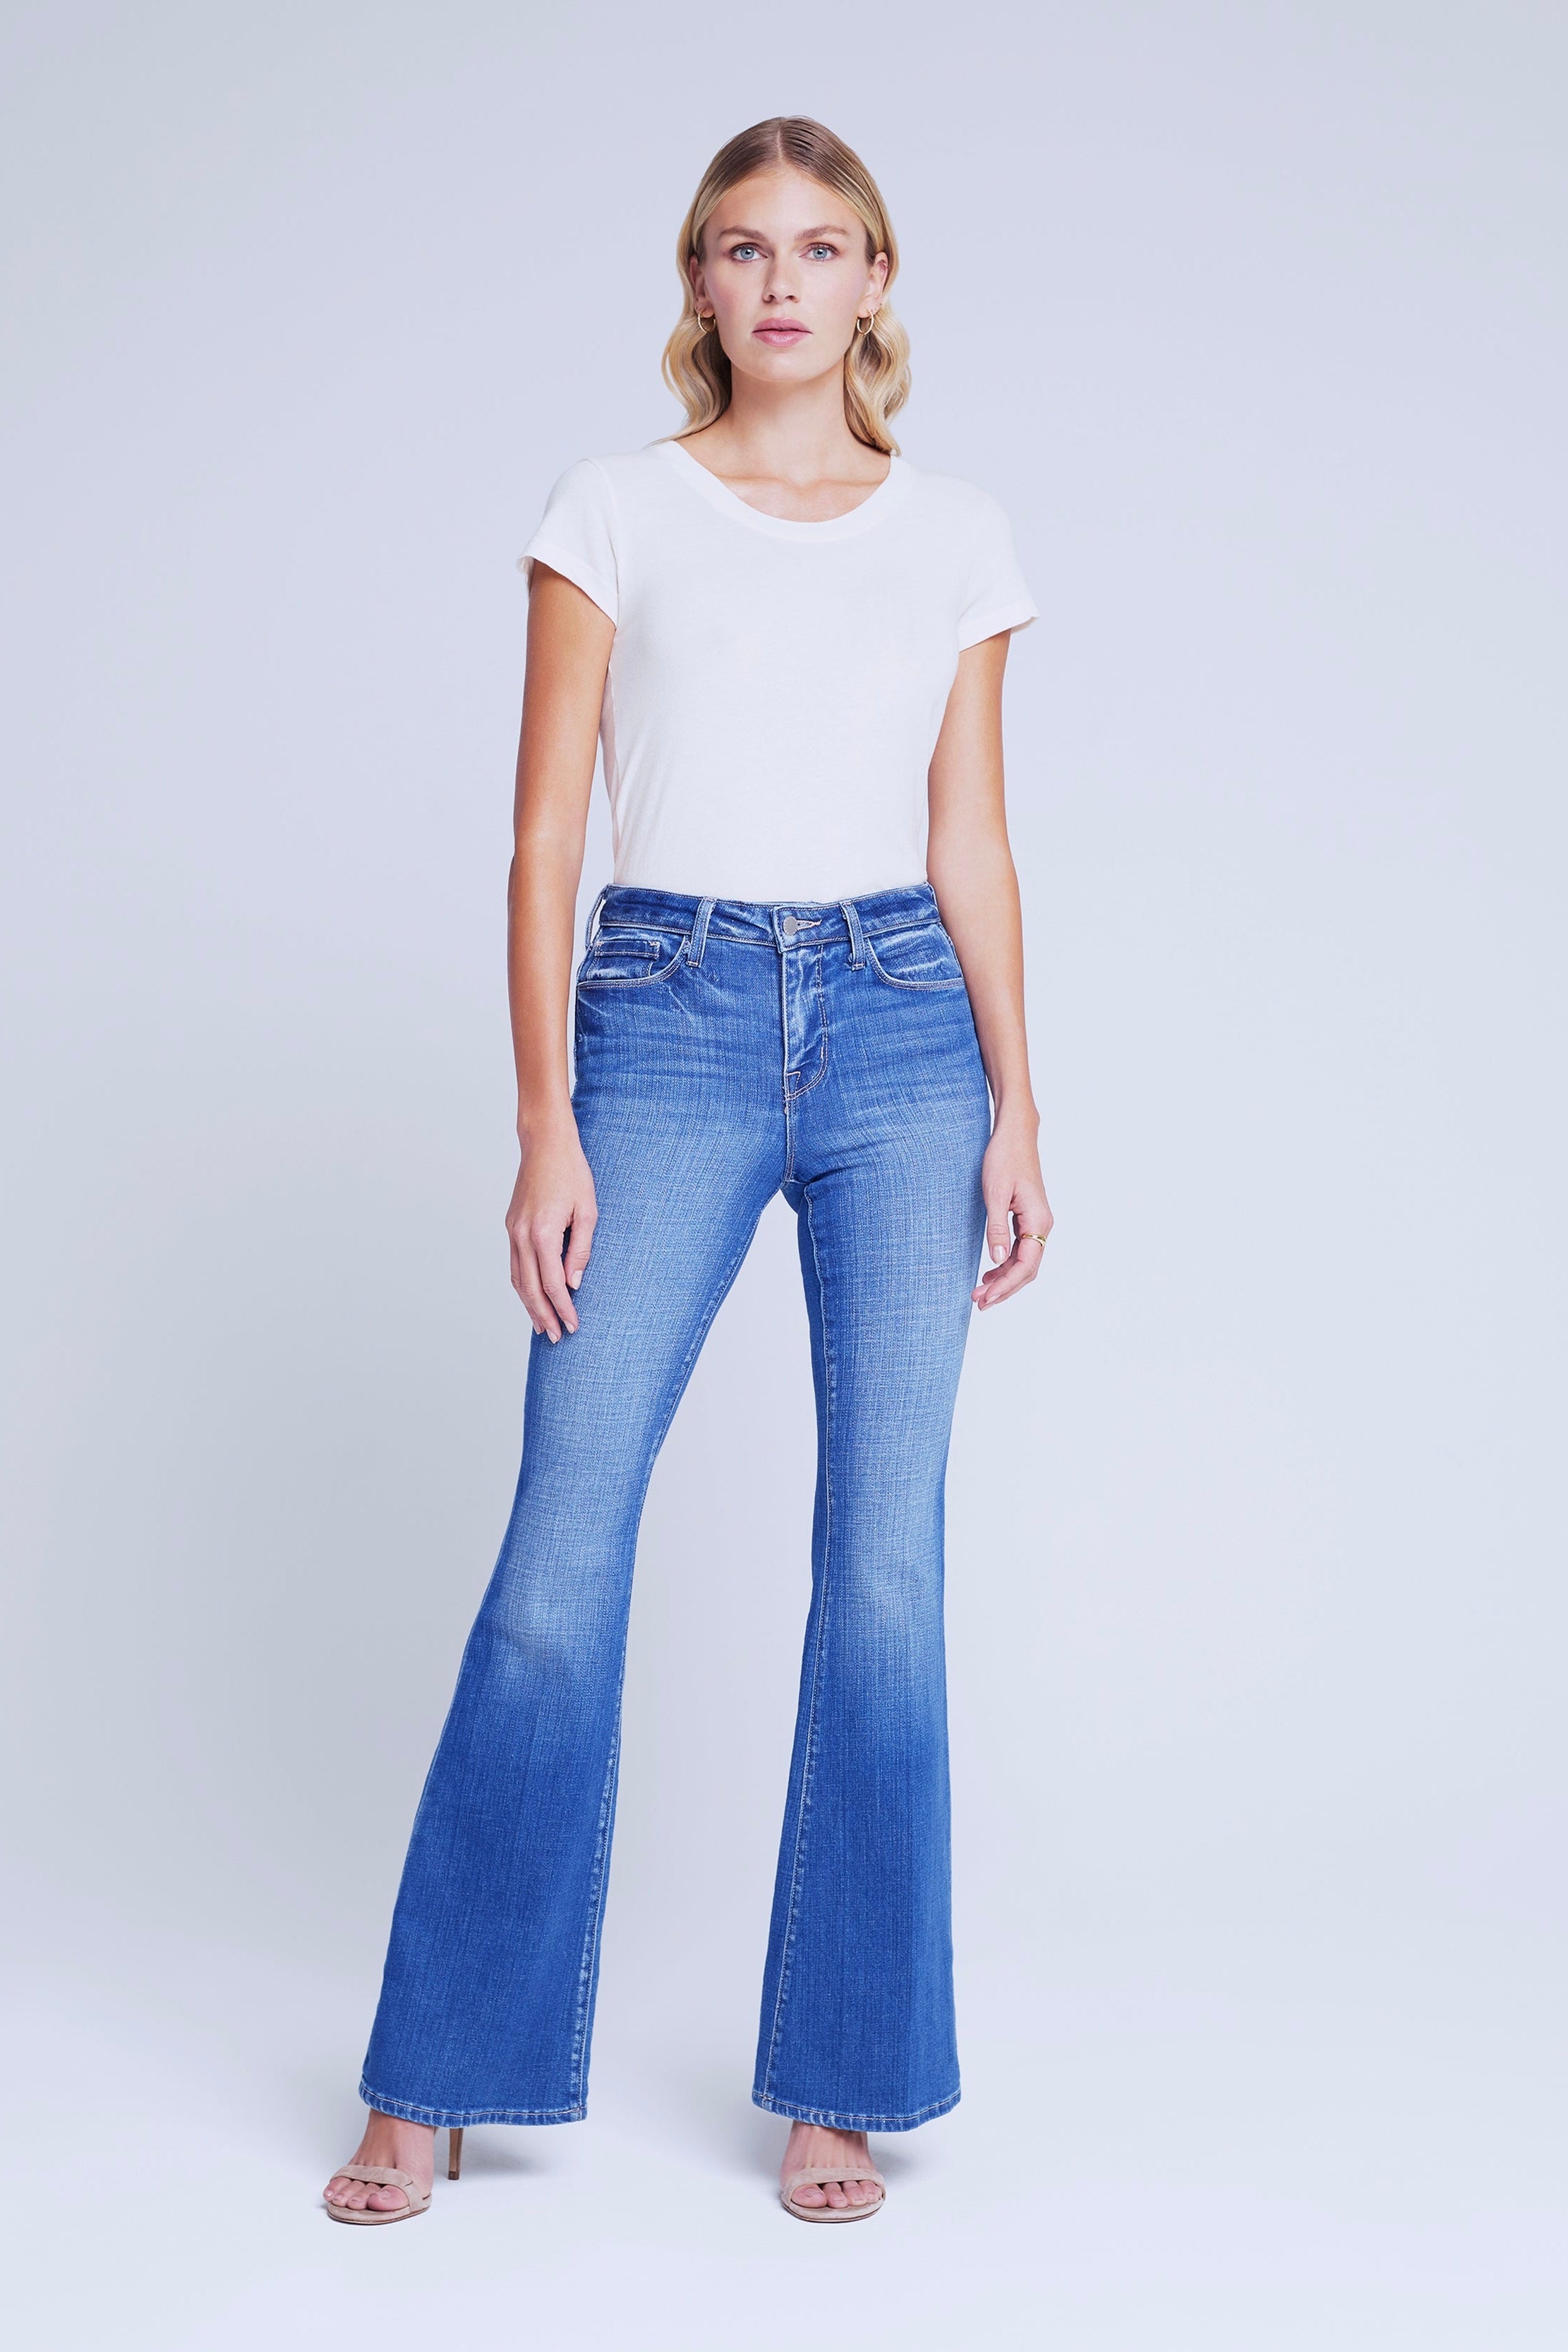 Women's L'AGENCE Jeans & Denim